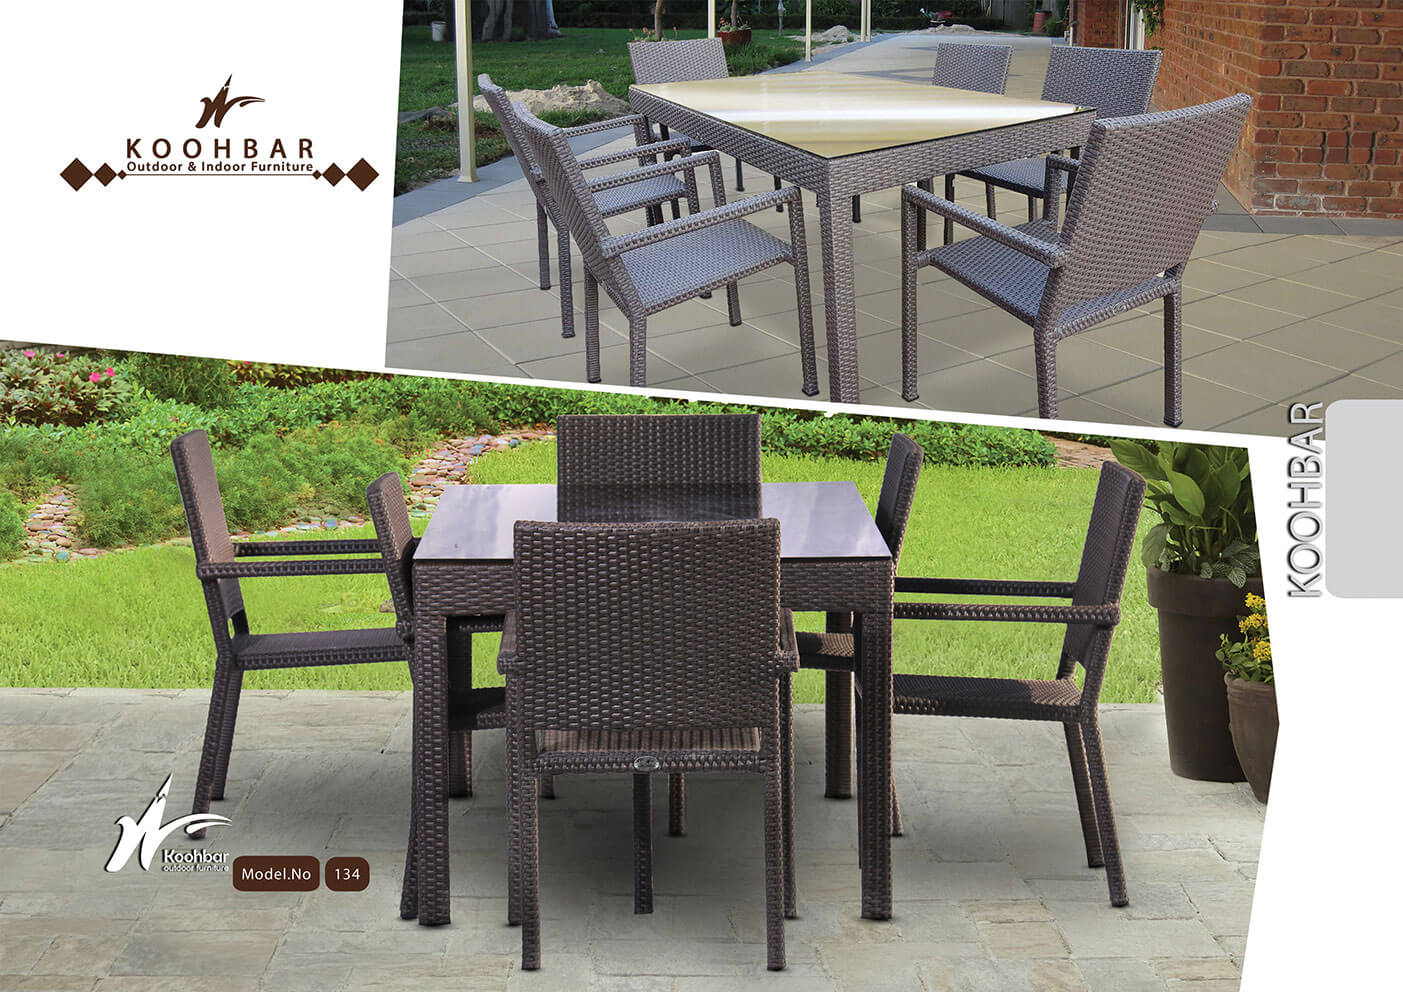 kohbar patio conversation sets 134 model0 - ست میز صندلی حصیری فضای باز کوهبر مدل ۱۳۴ -  - patio-dining-furniture